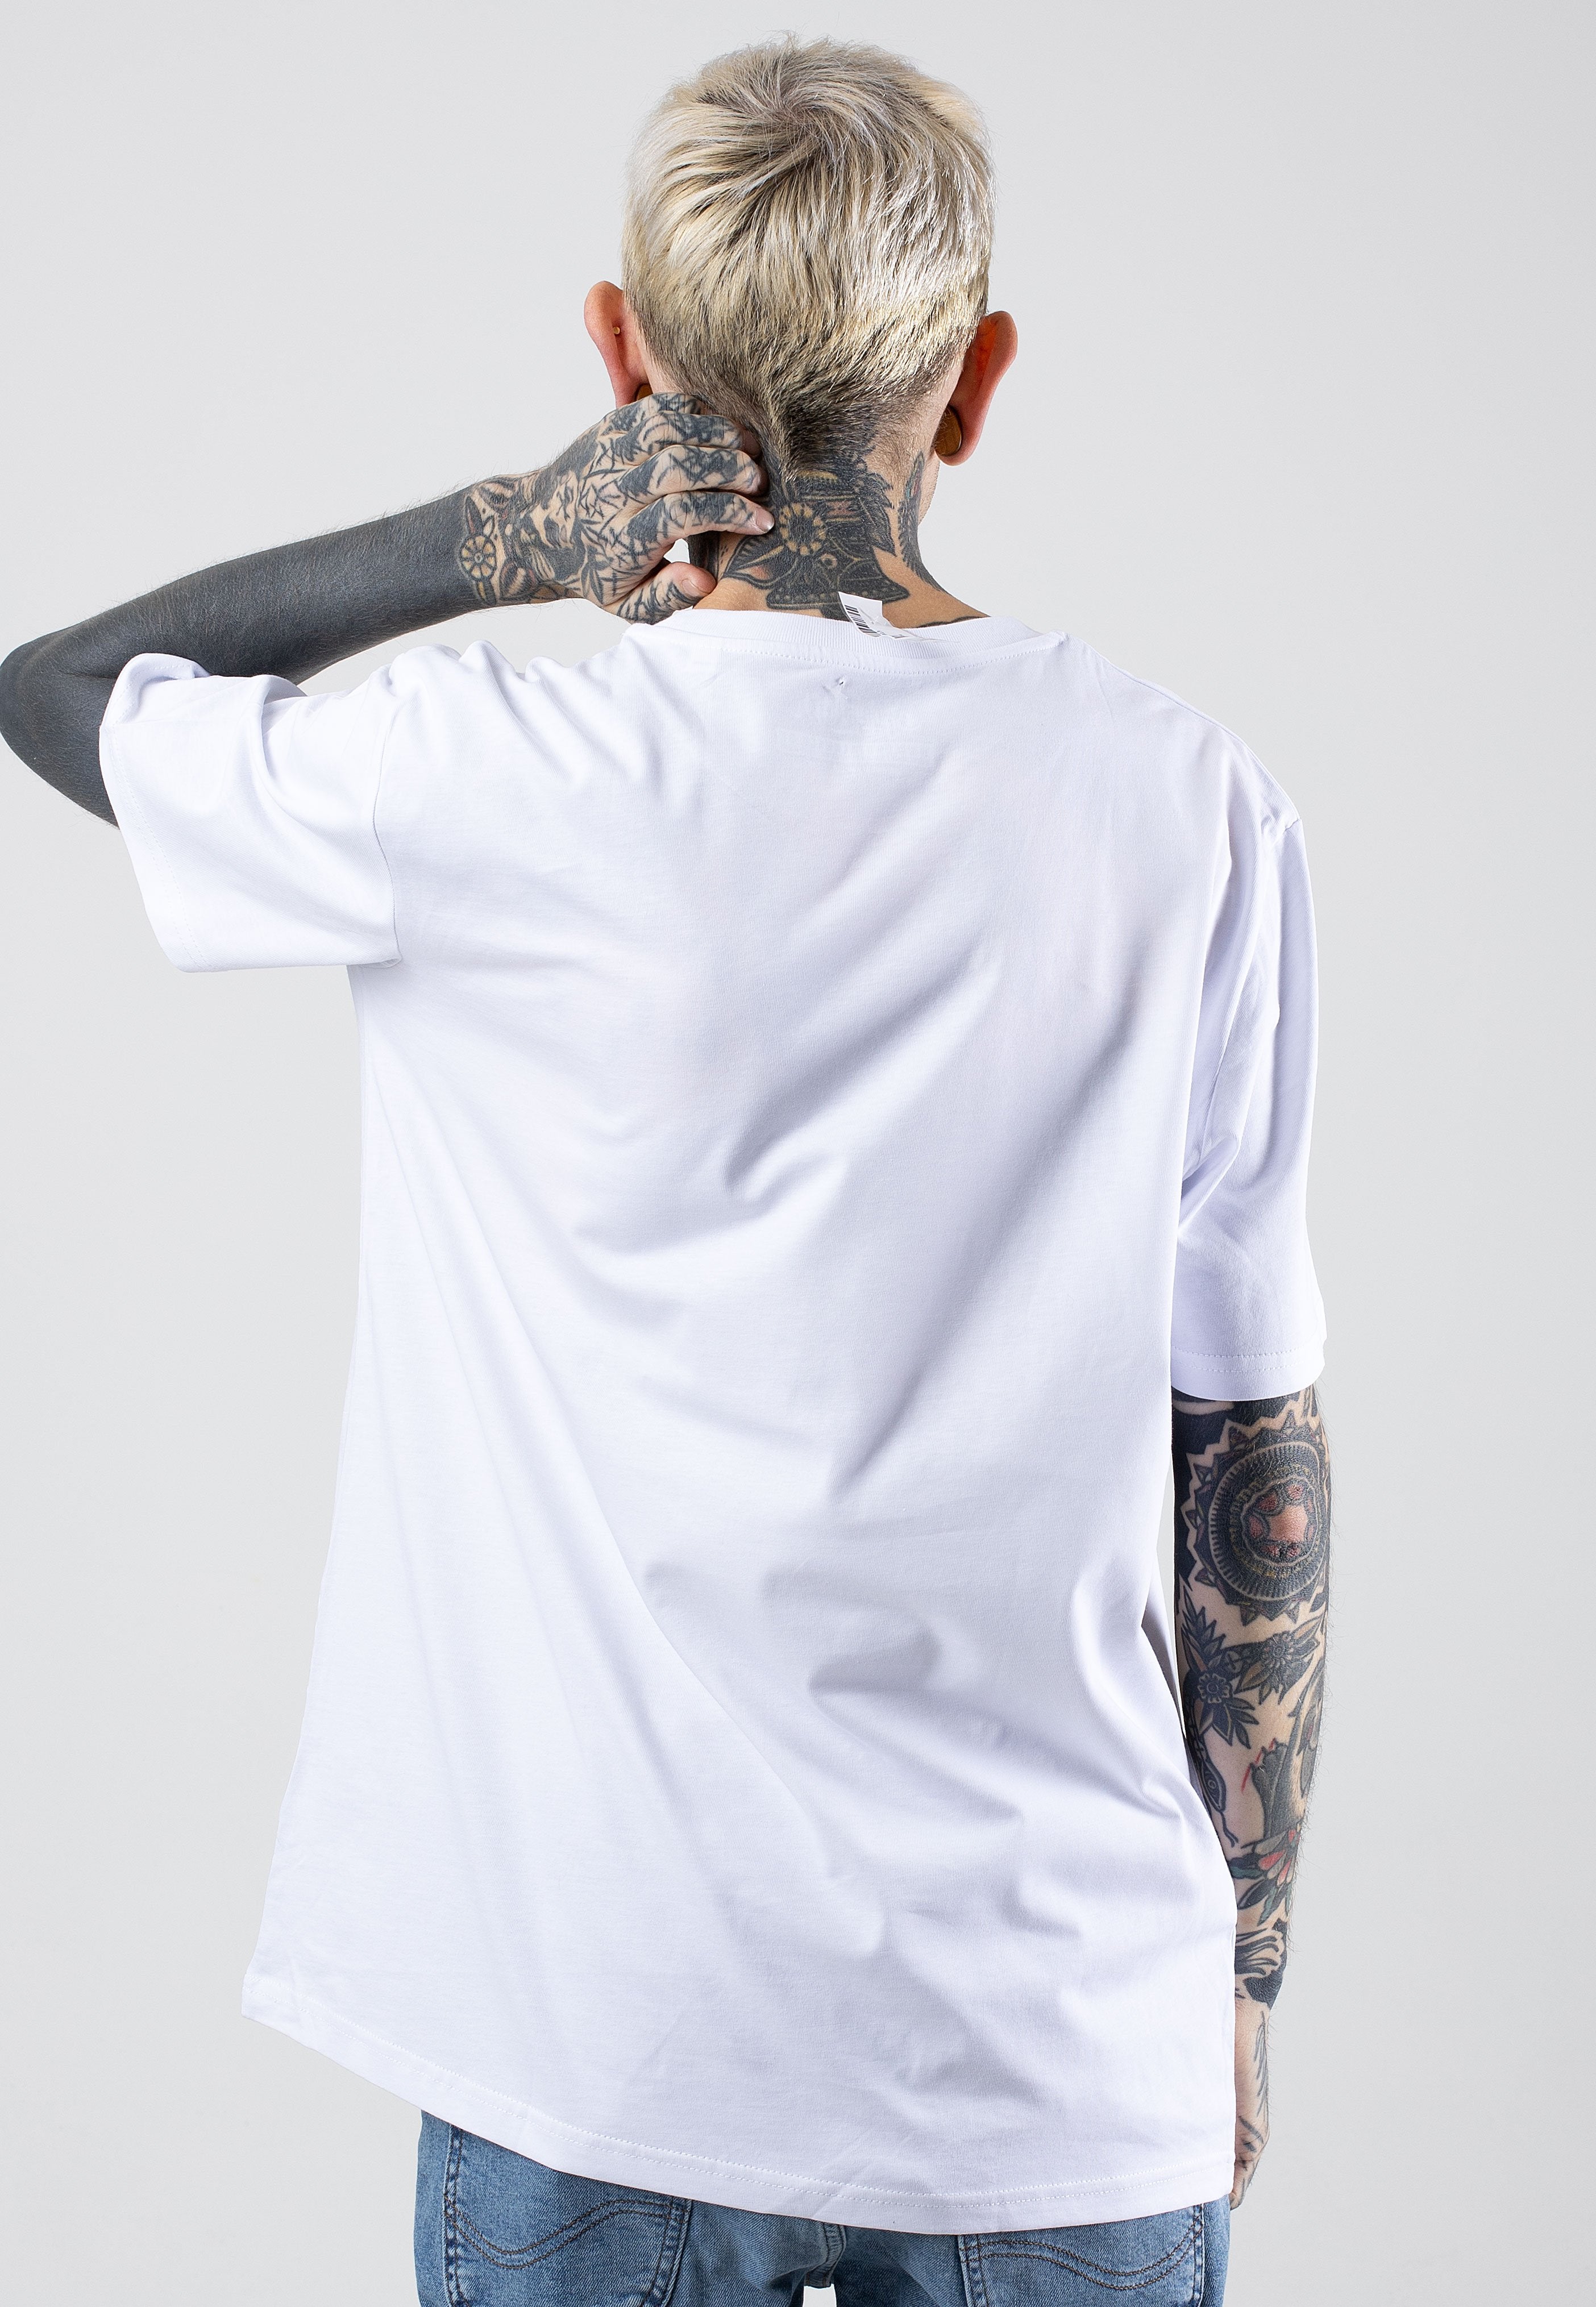 Brutal Knack - Symbolic White - T-Shirt